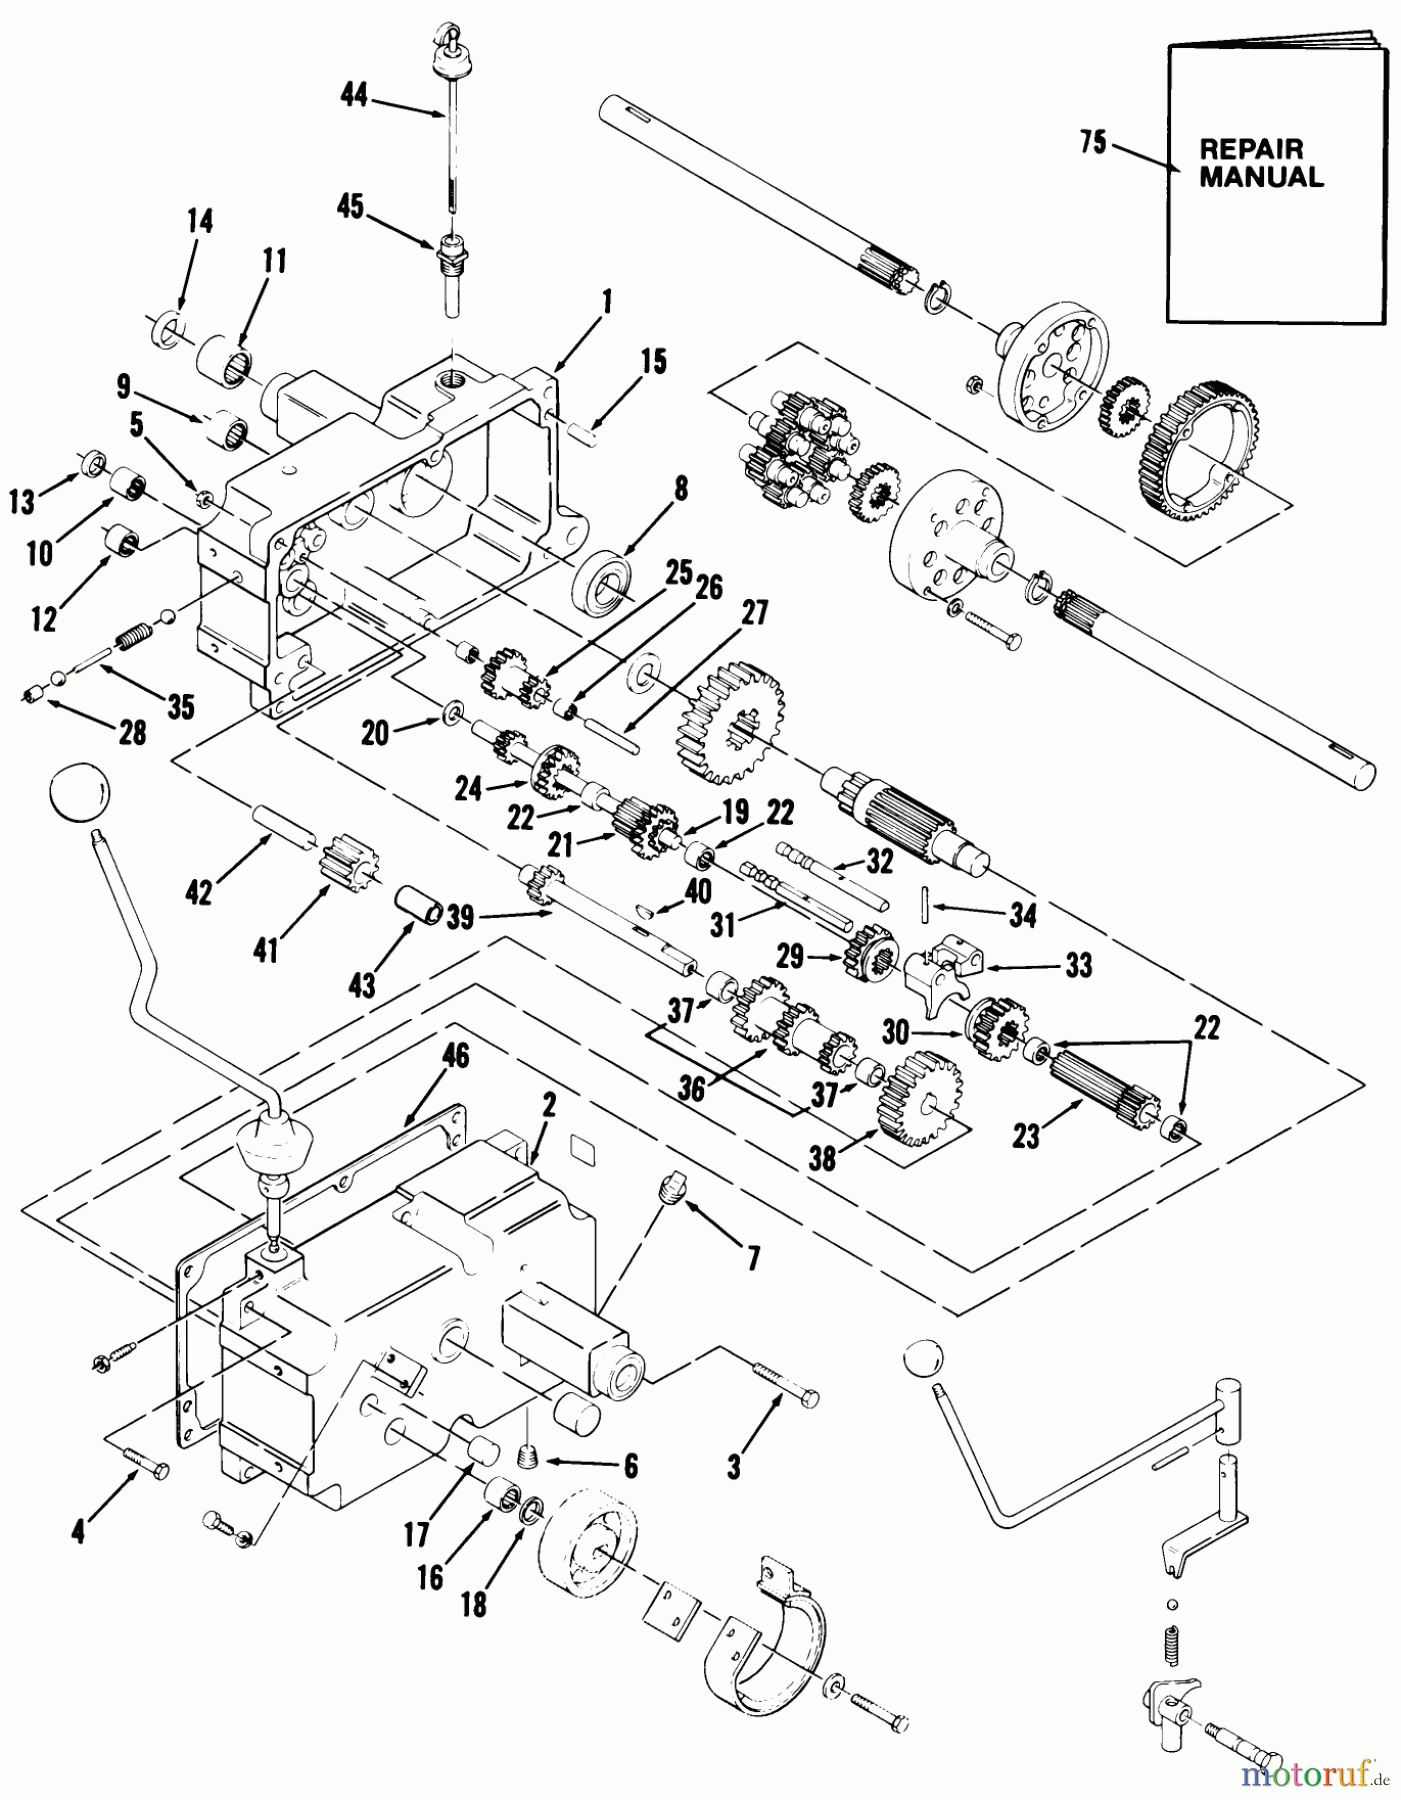  Toro Neu Mowers, Lawn & Garden Tractor Seite 1 11-14KE01 (C-145) - Toro C-145 Automatic Tractor, 1984 MECHANICAL TRANSMISSION-8-SPEED #1